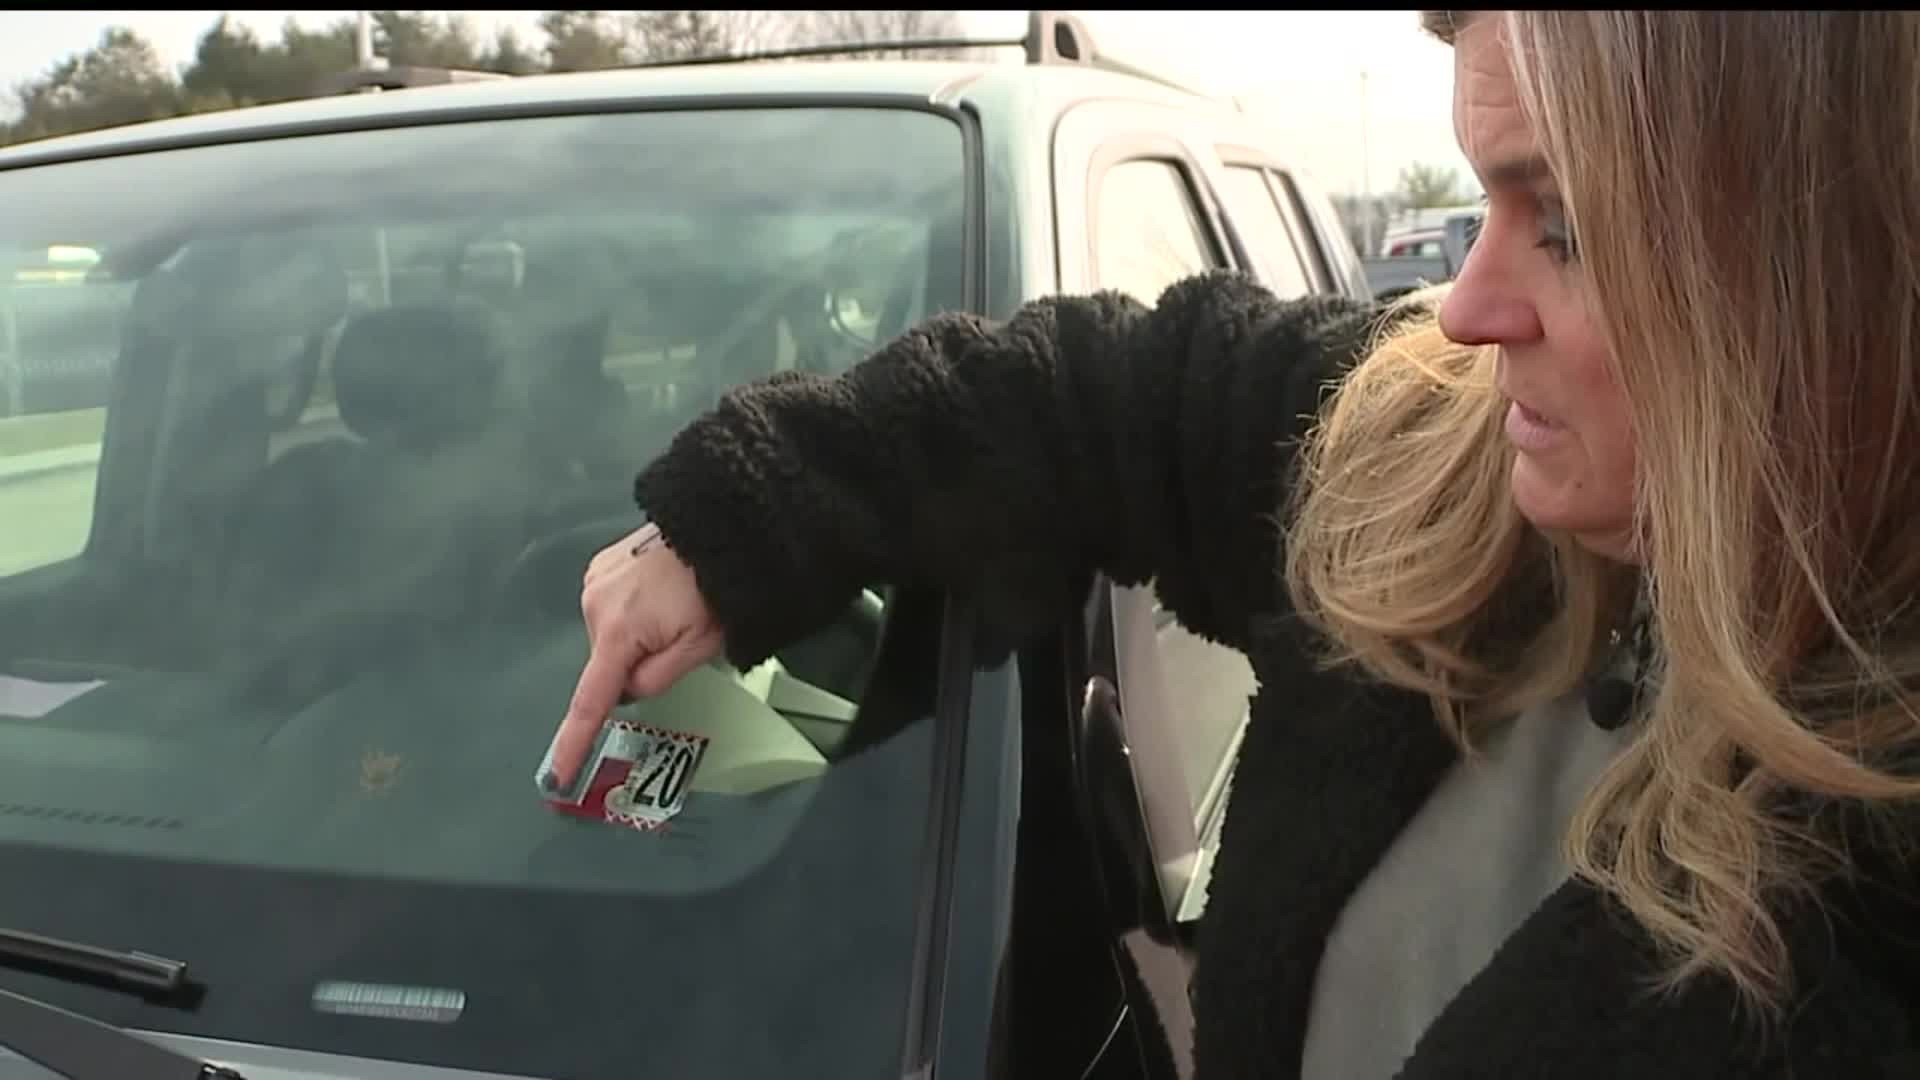 Woman raises concerns over sale of car at Mechanicsburg used car lot